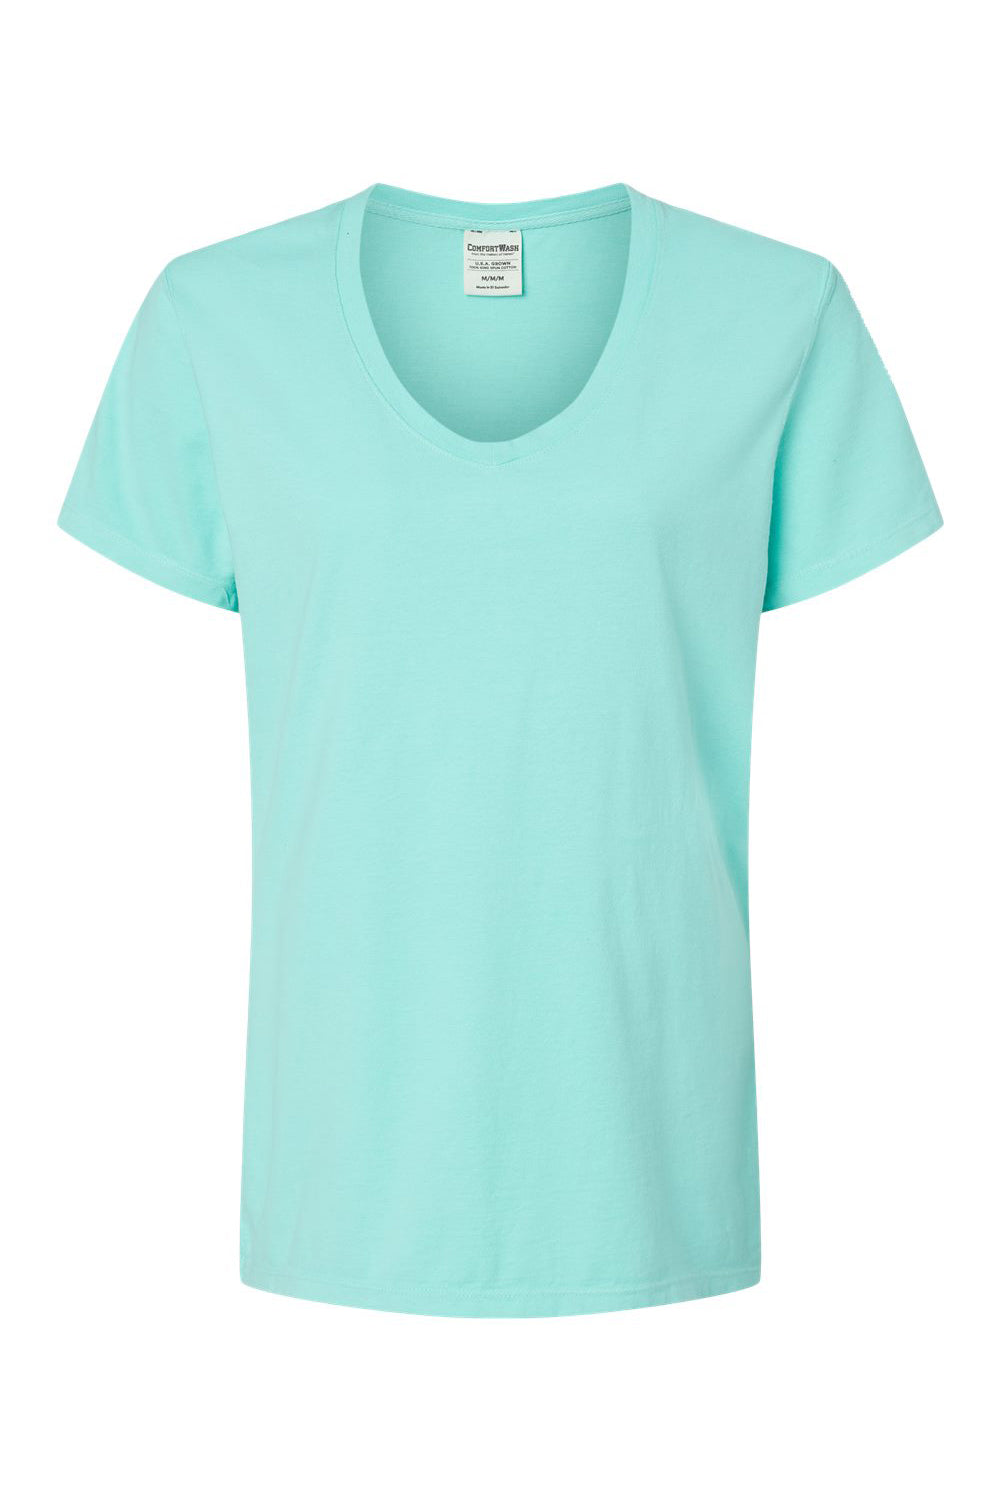 ComfortWash By Hanes GDH125 Mens Garment Dyed Short Sleeve V-Neck T-Shirt Mint Green Flat Front